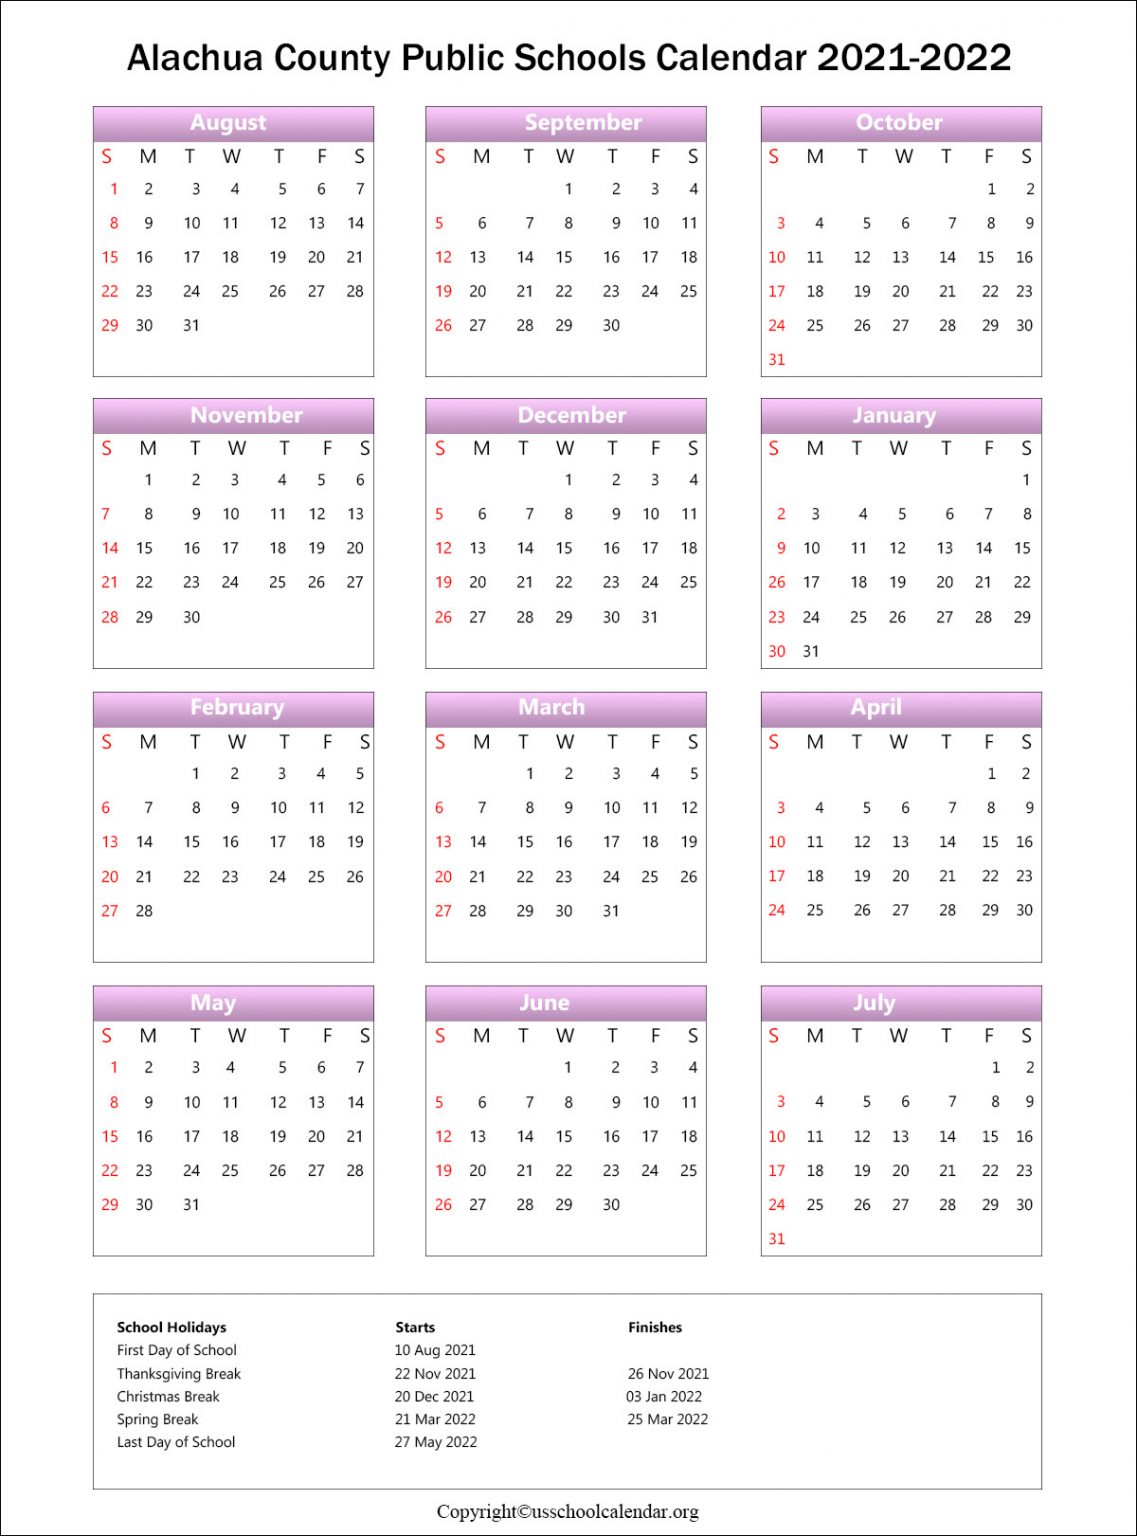 Alachua County School Holiday Calendar Archives - US School Calendar